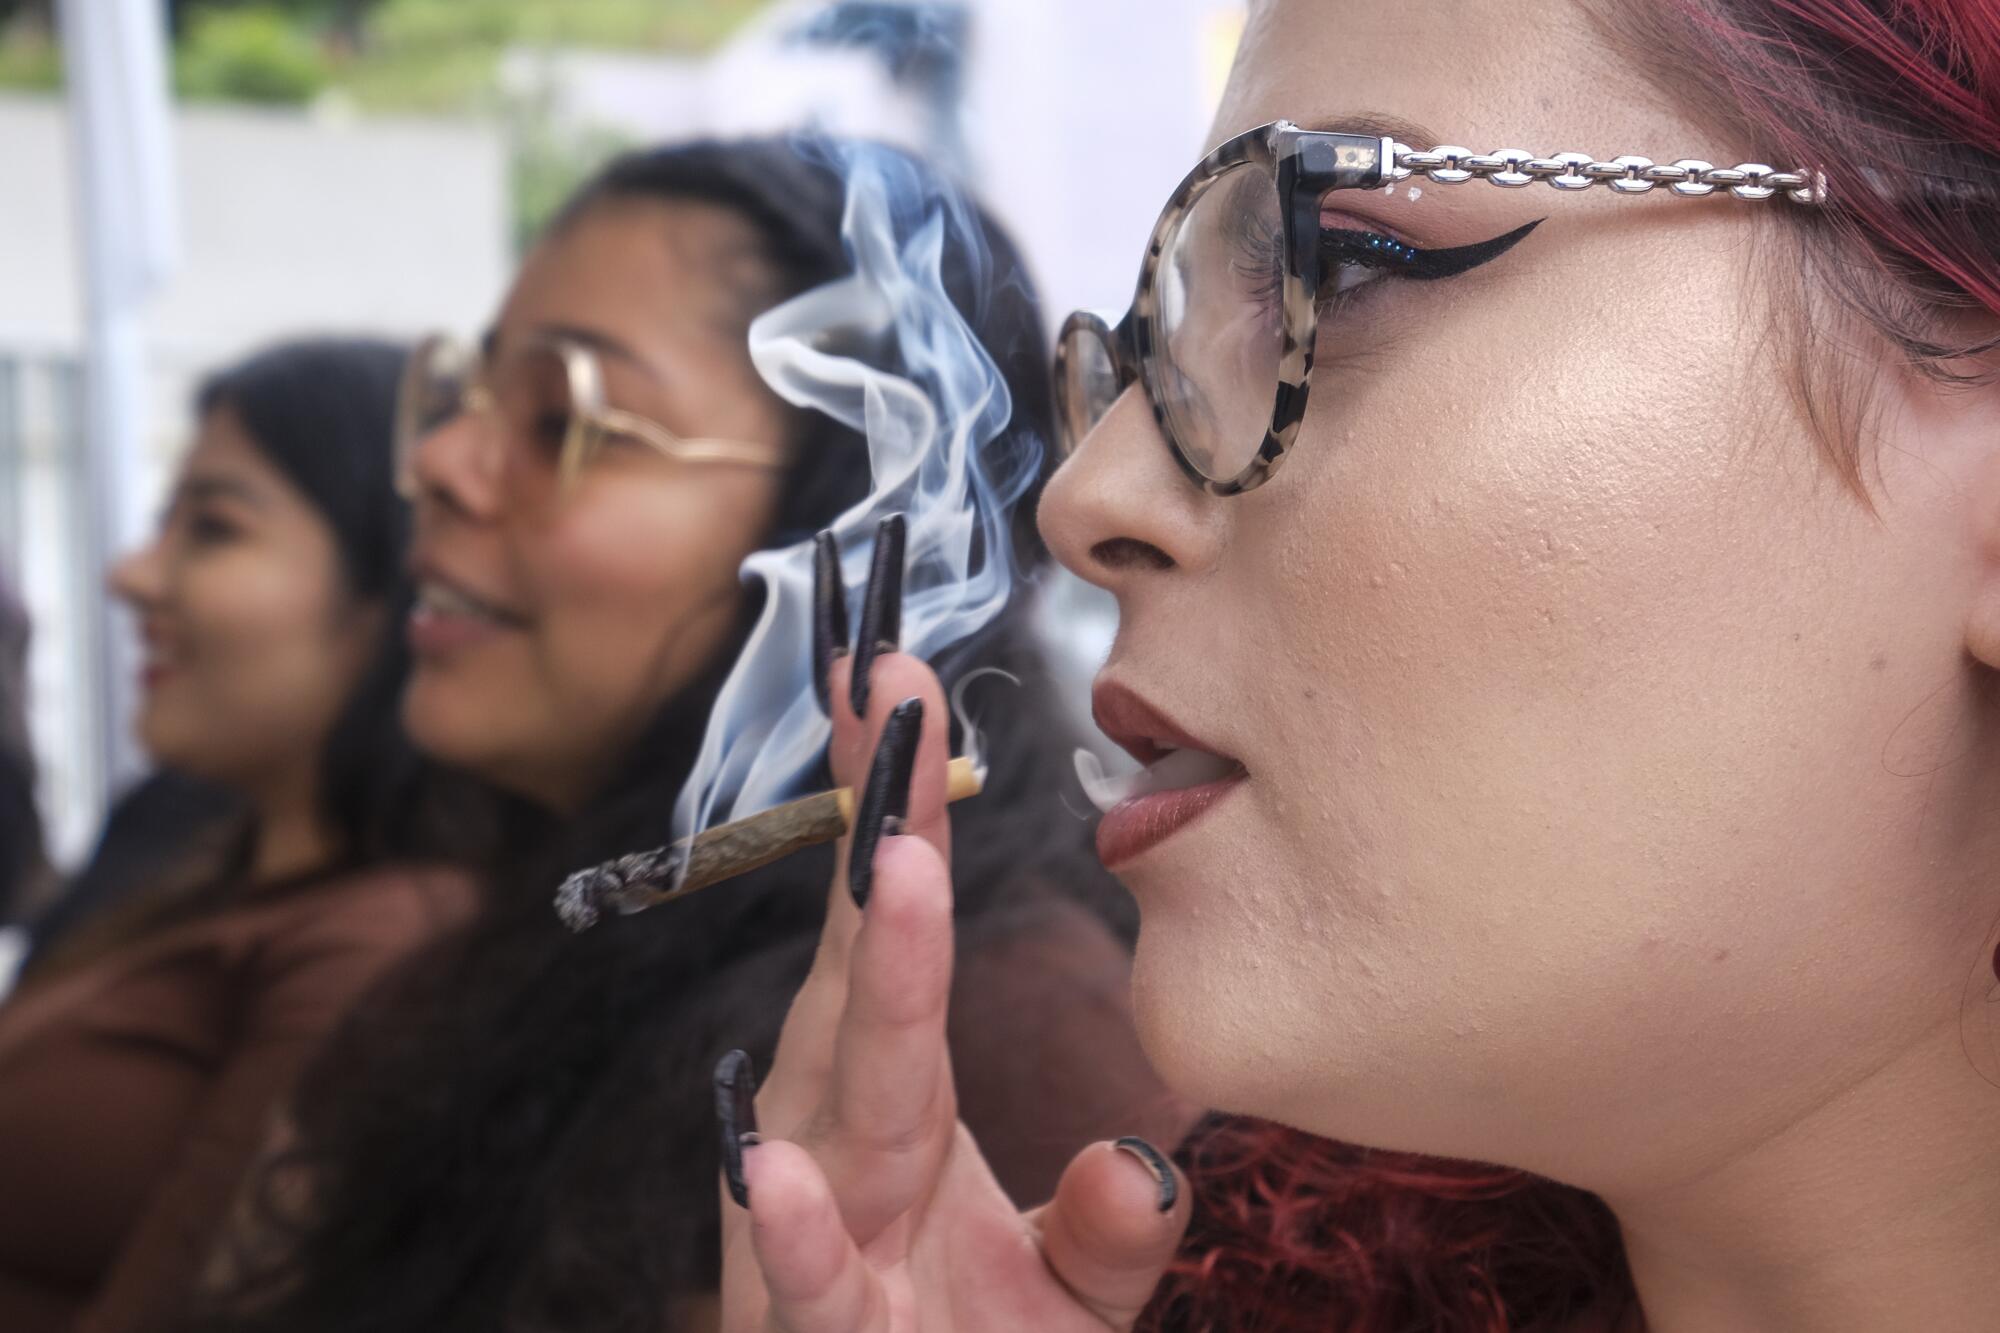 A woman smokes a joint